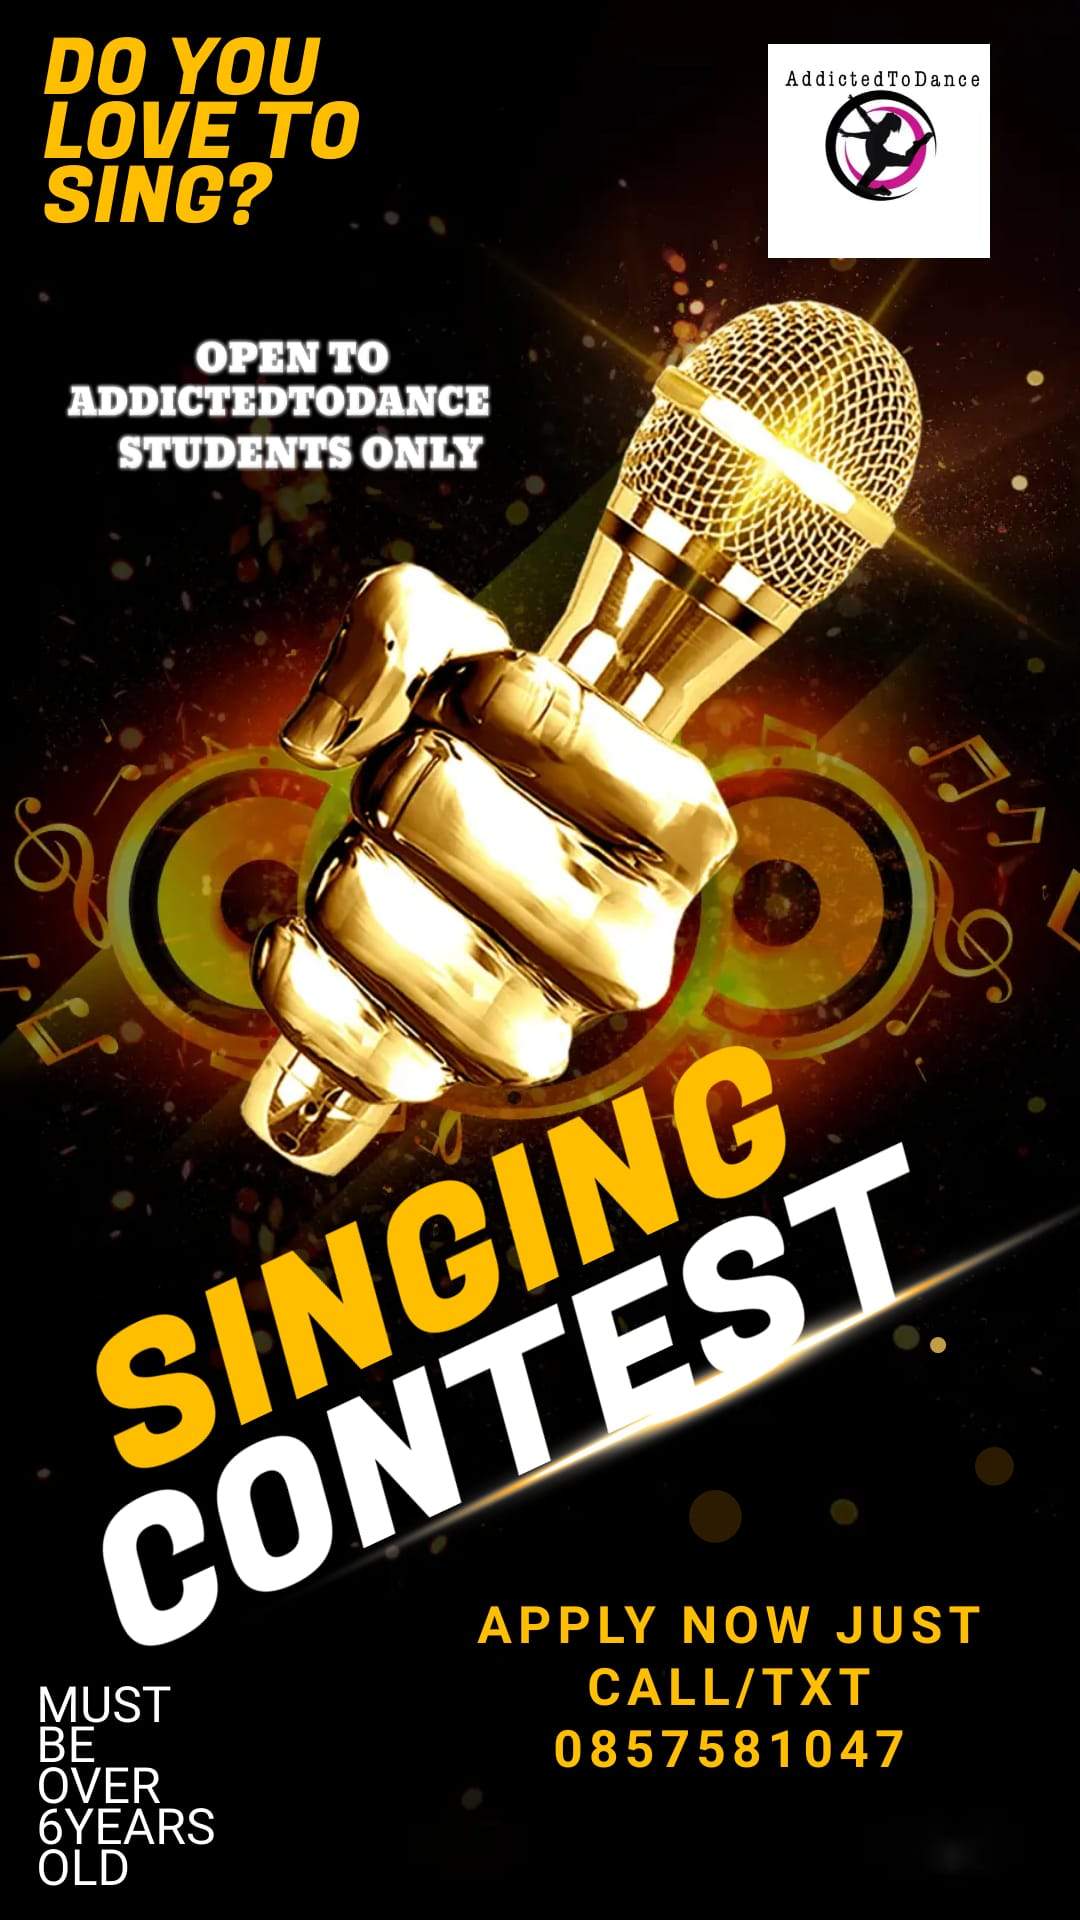 Addictedtodance Singing Contest!